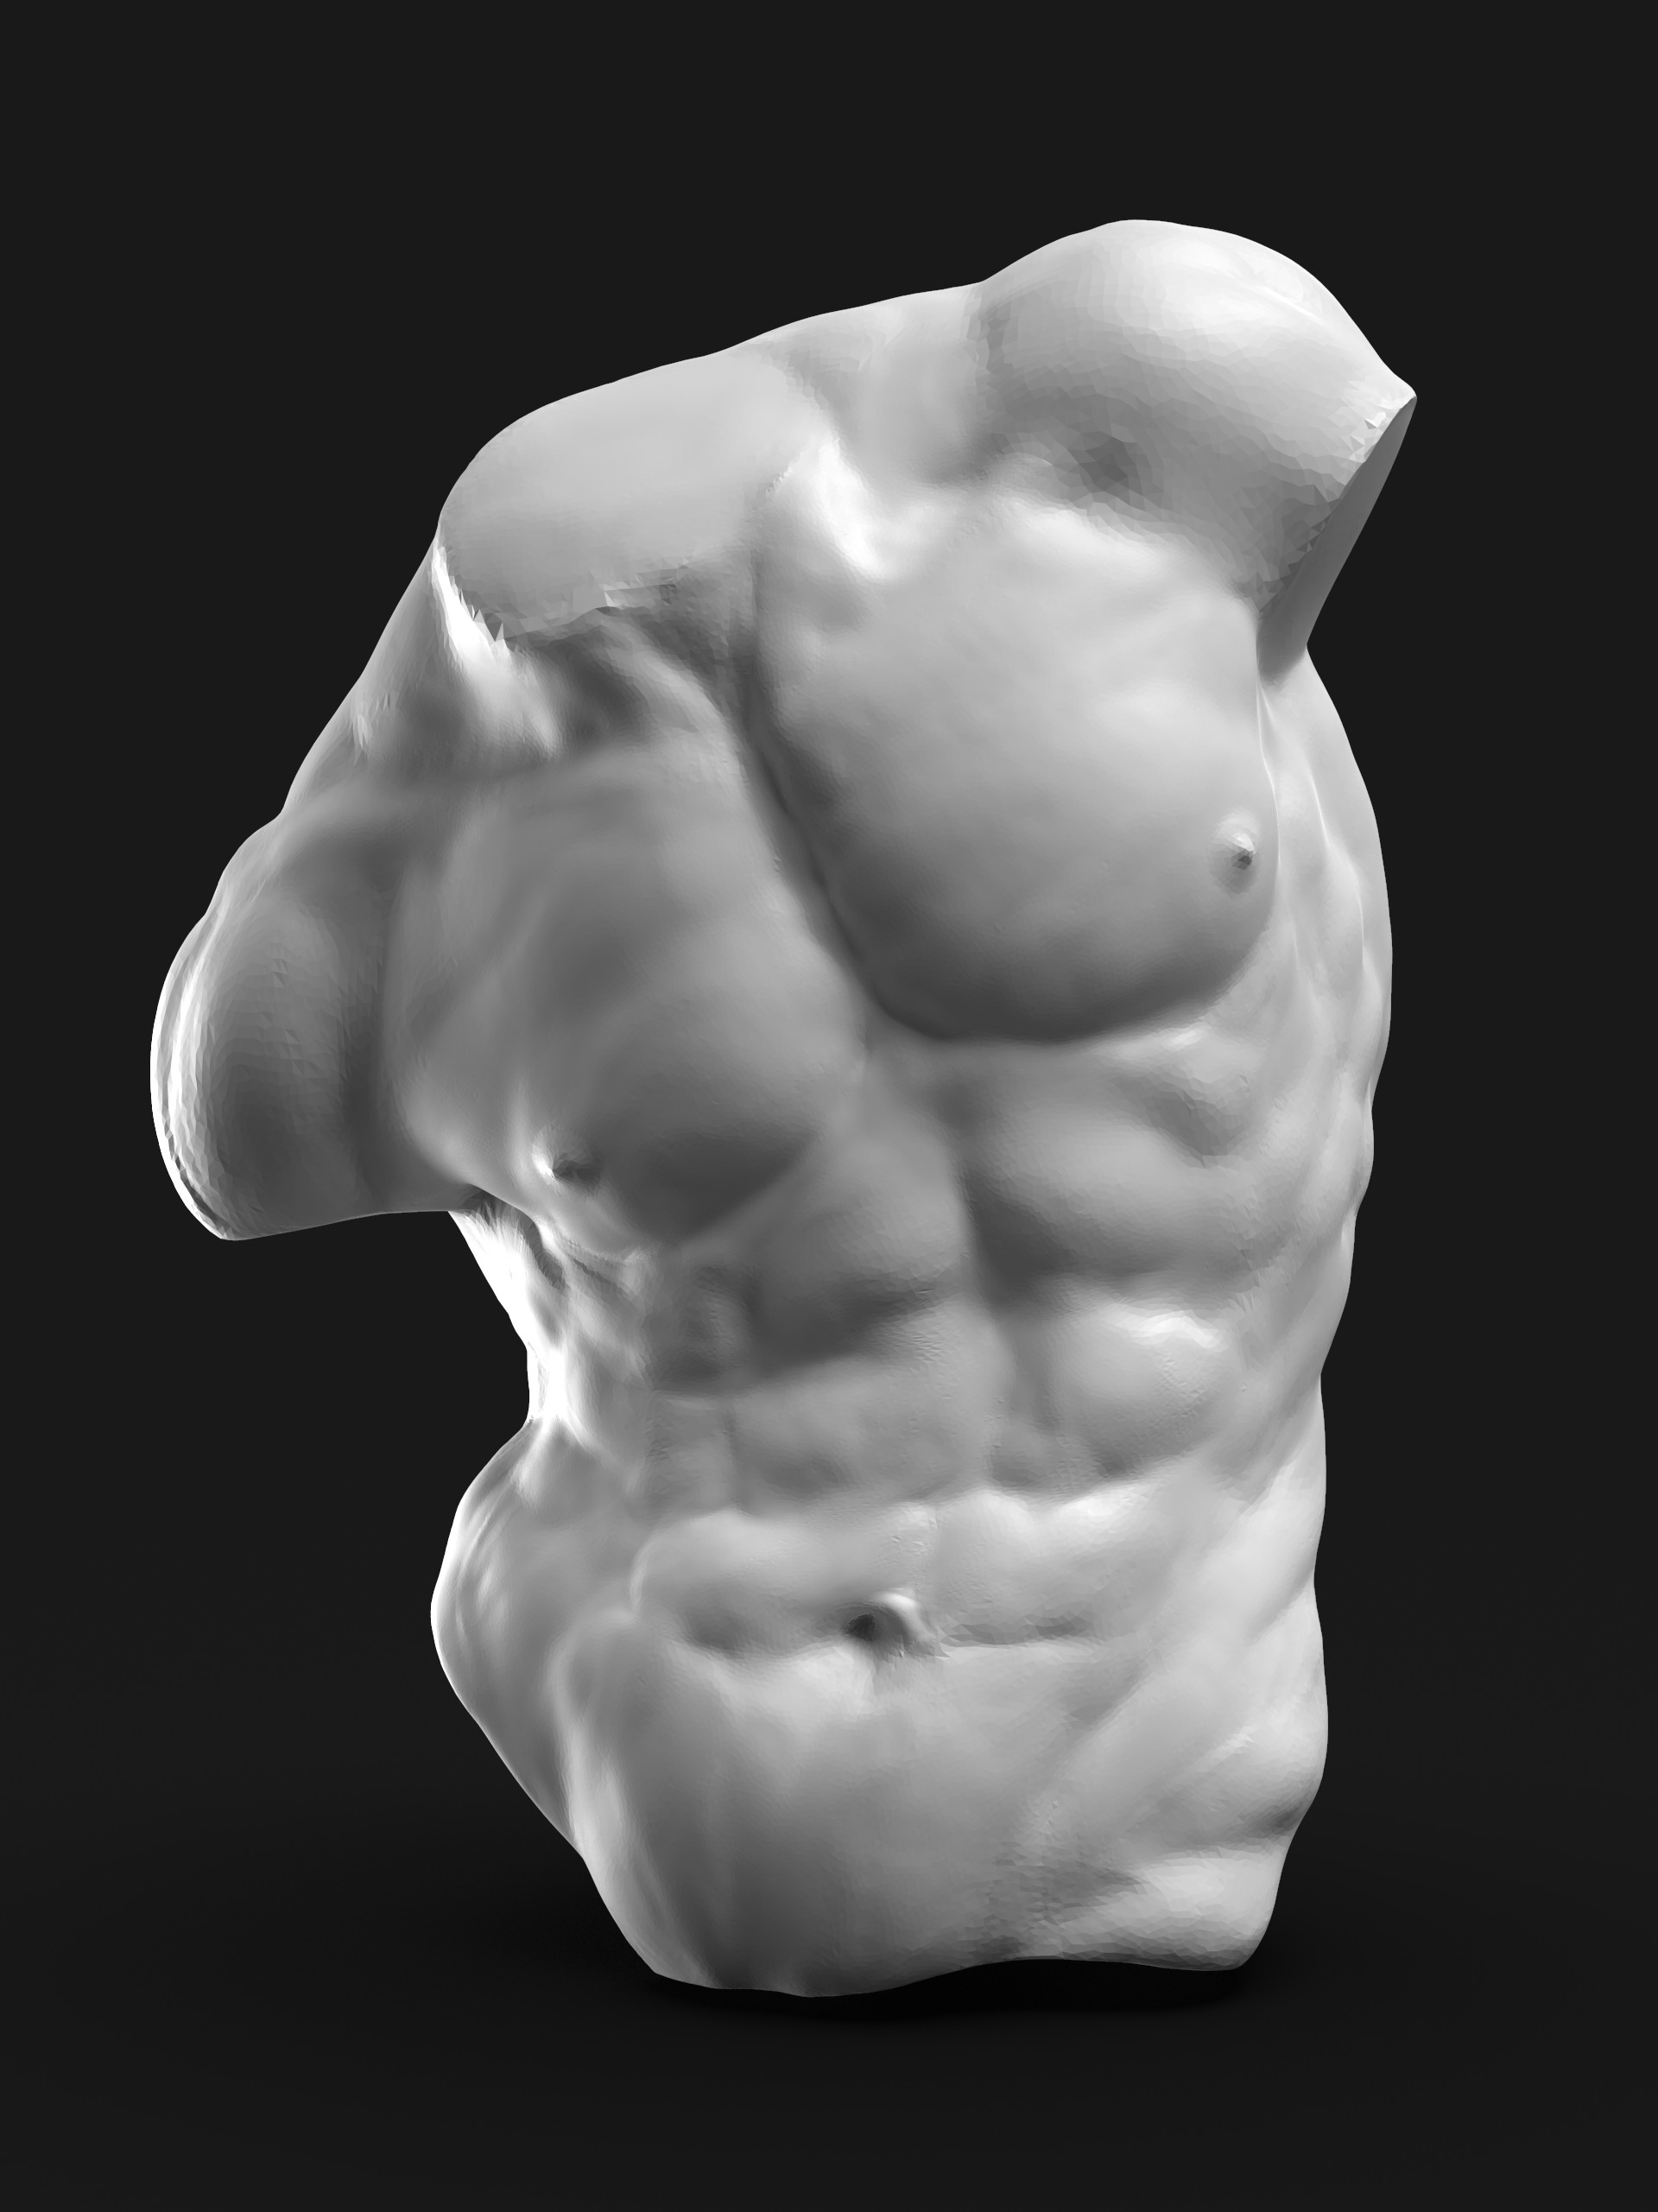 ArtStation - Anatomy study- Male Torso, Riccardo Meneghello